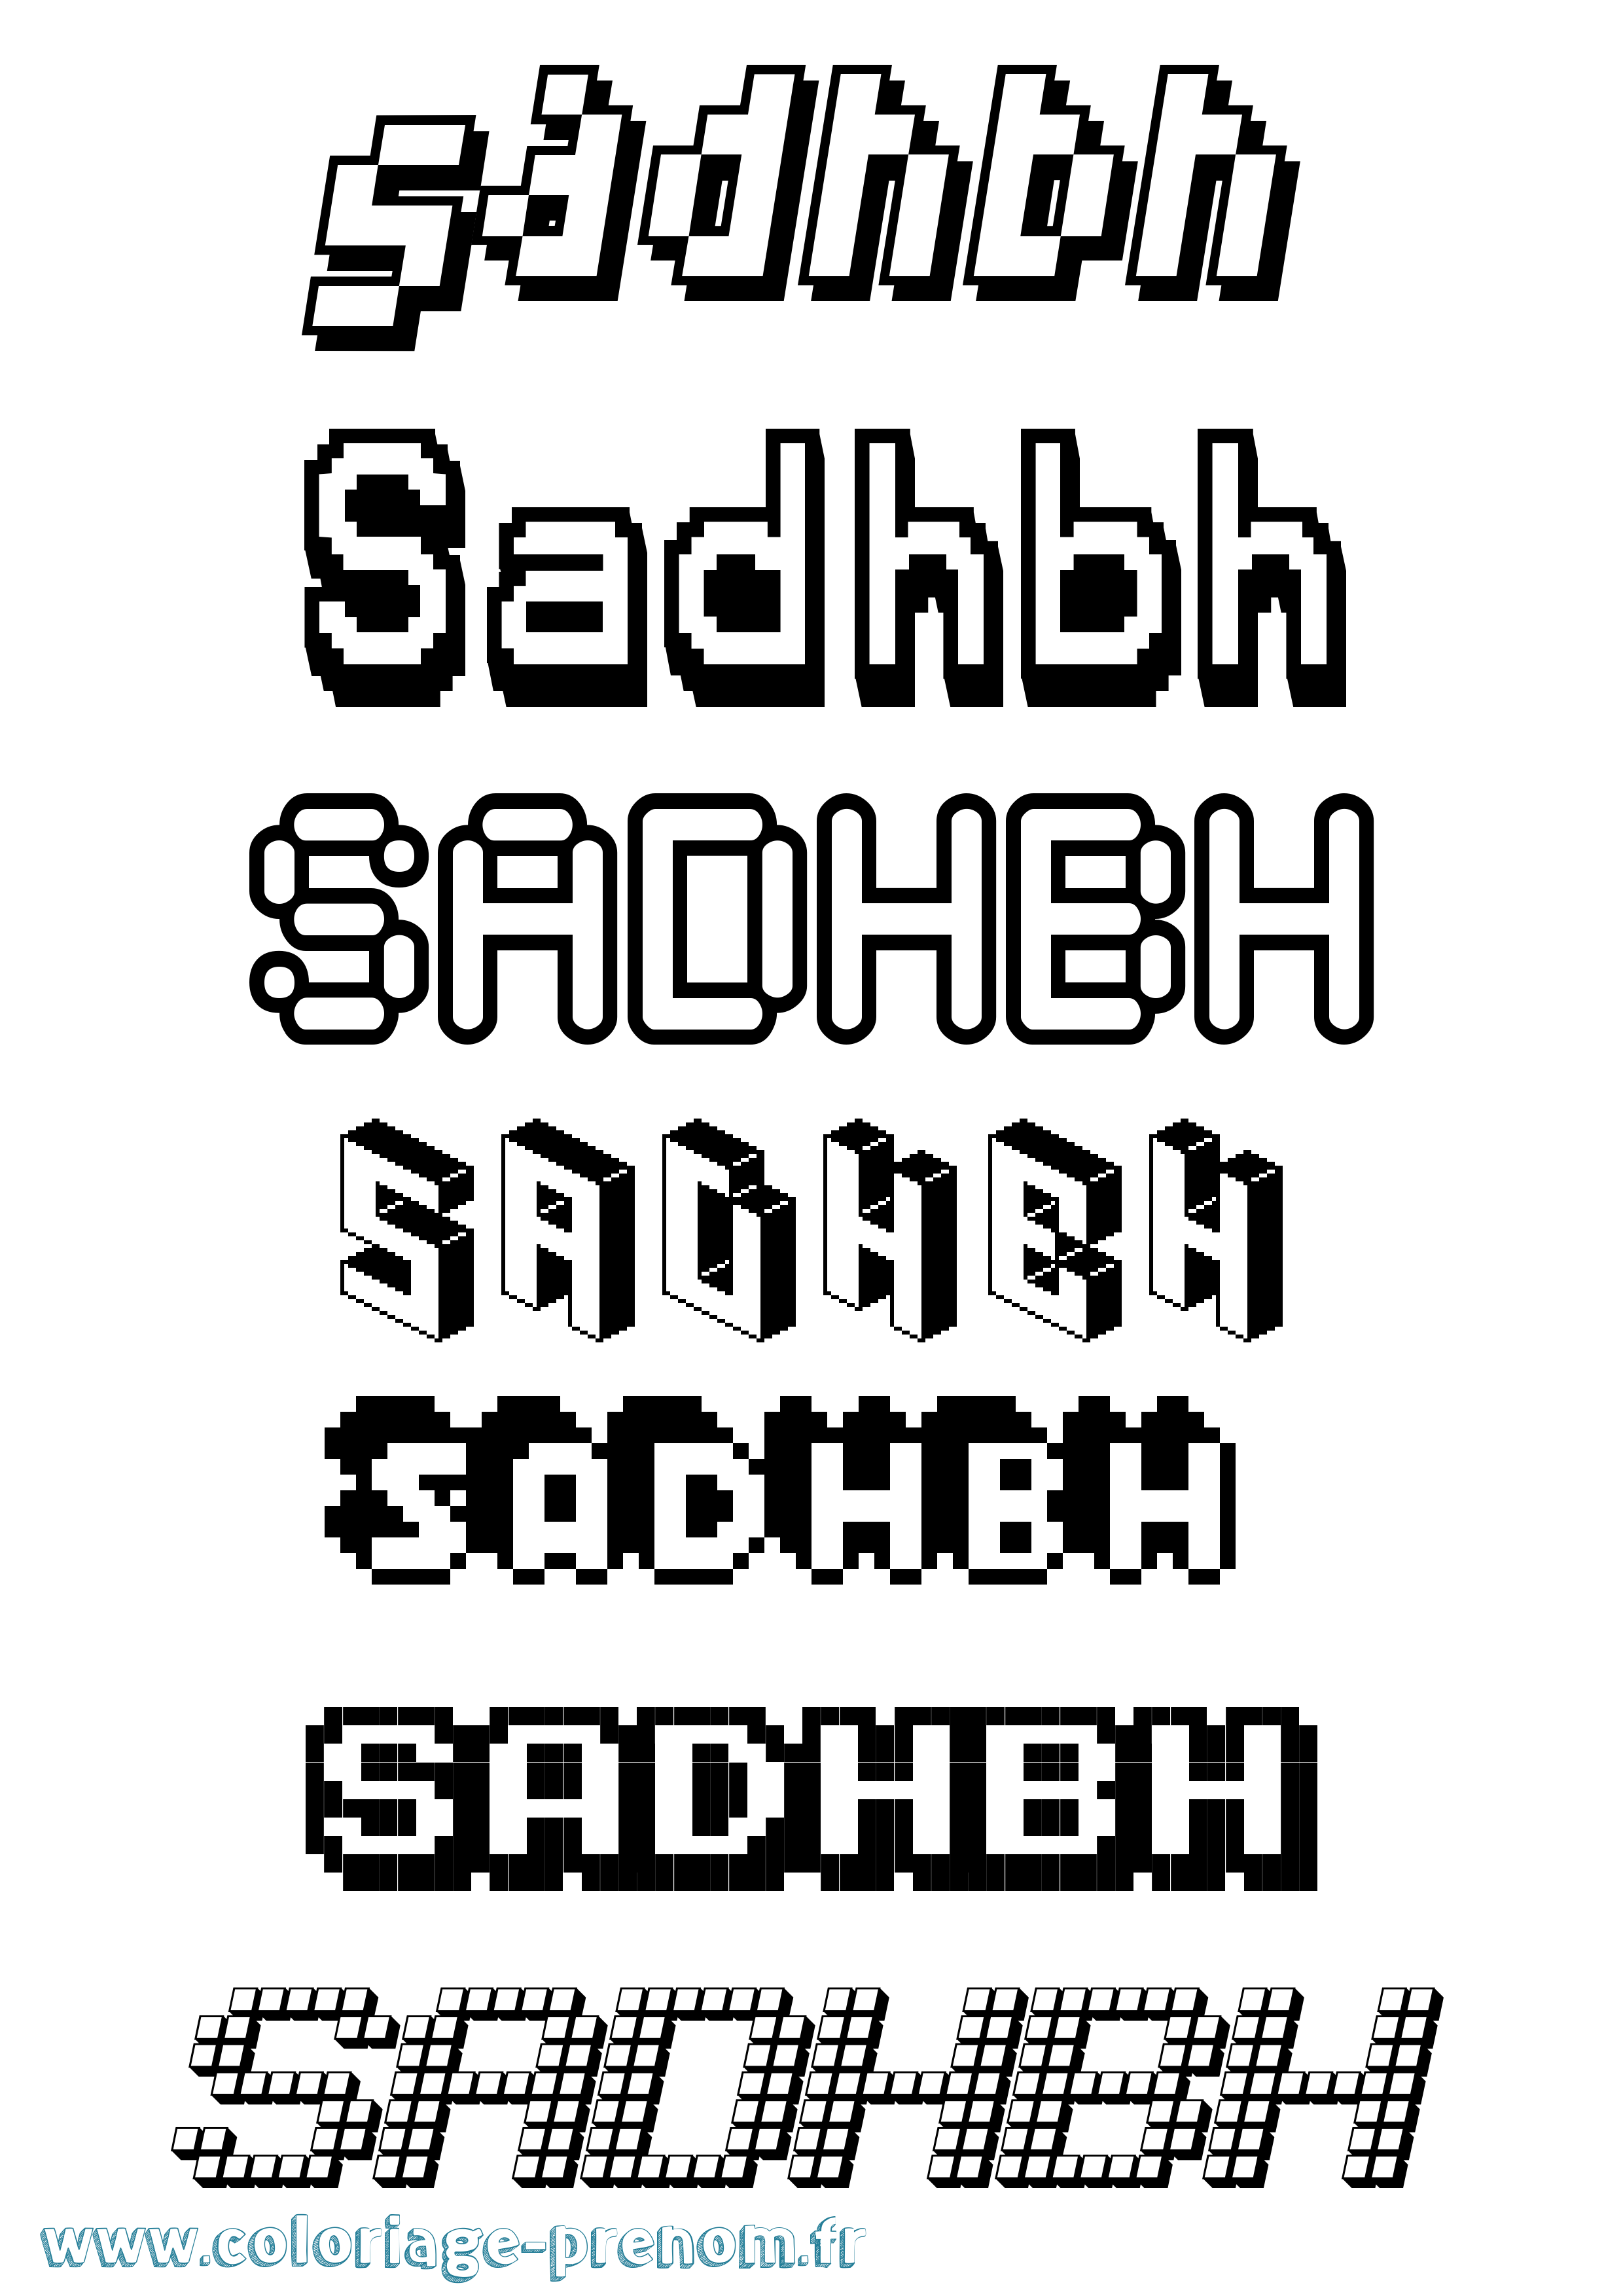 Coloriage prénom Sadhbh Pixel